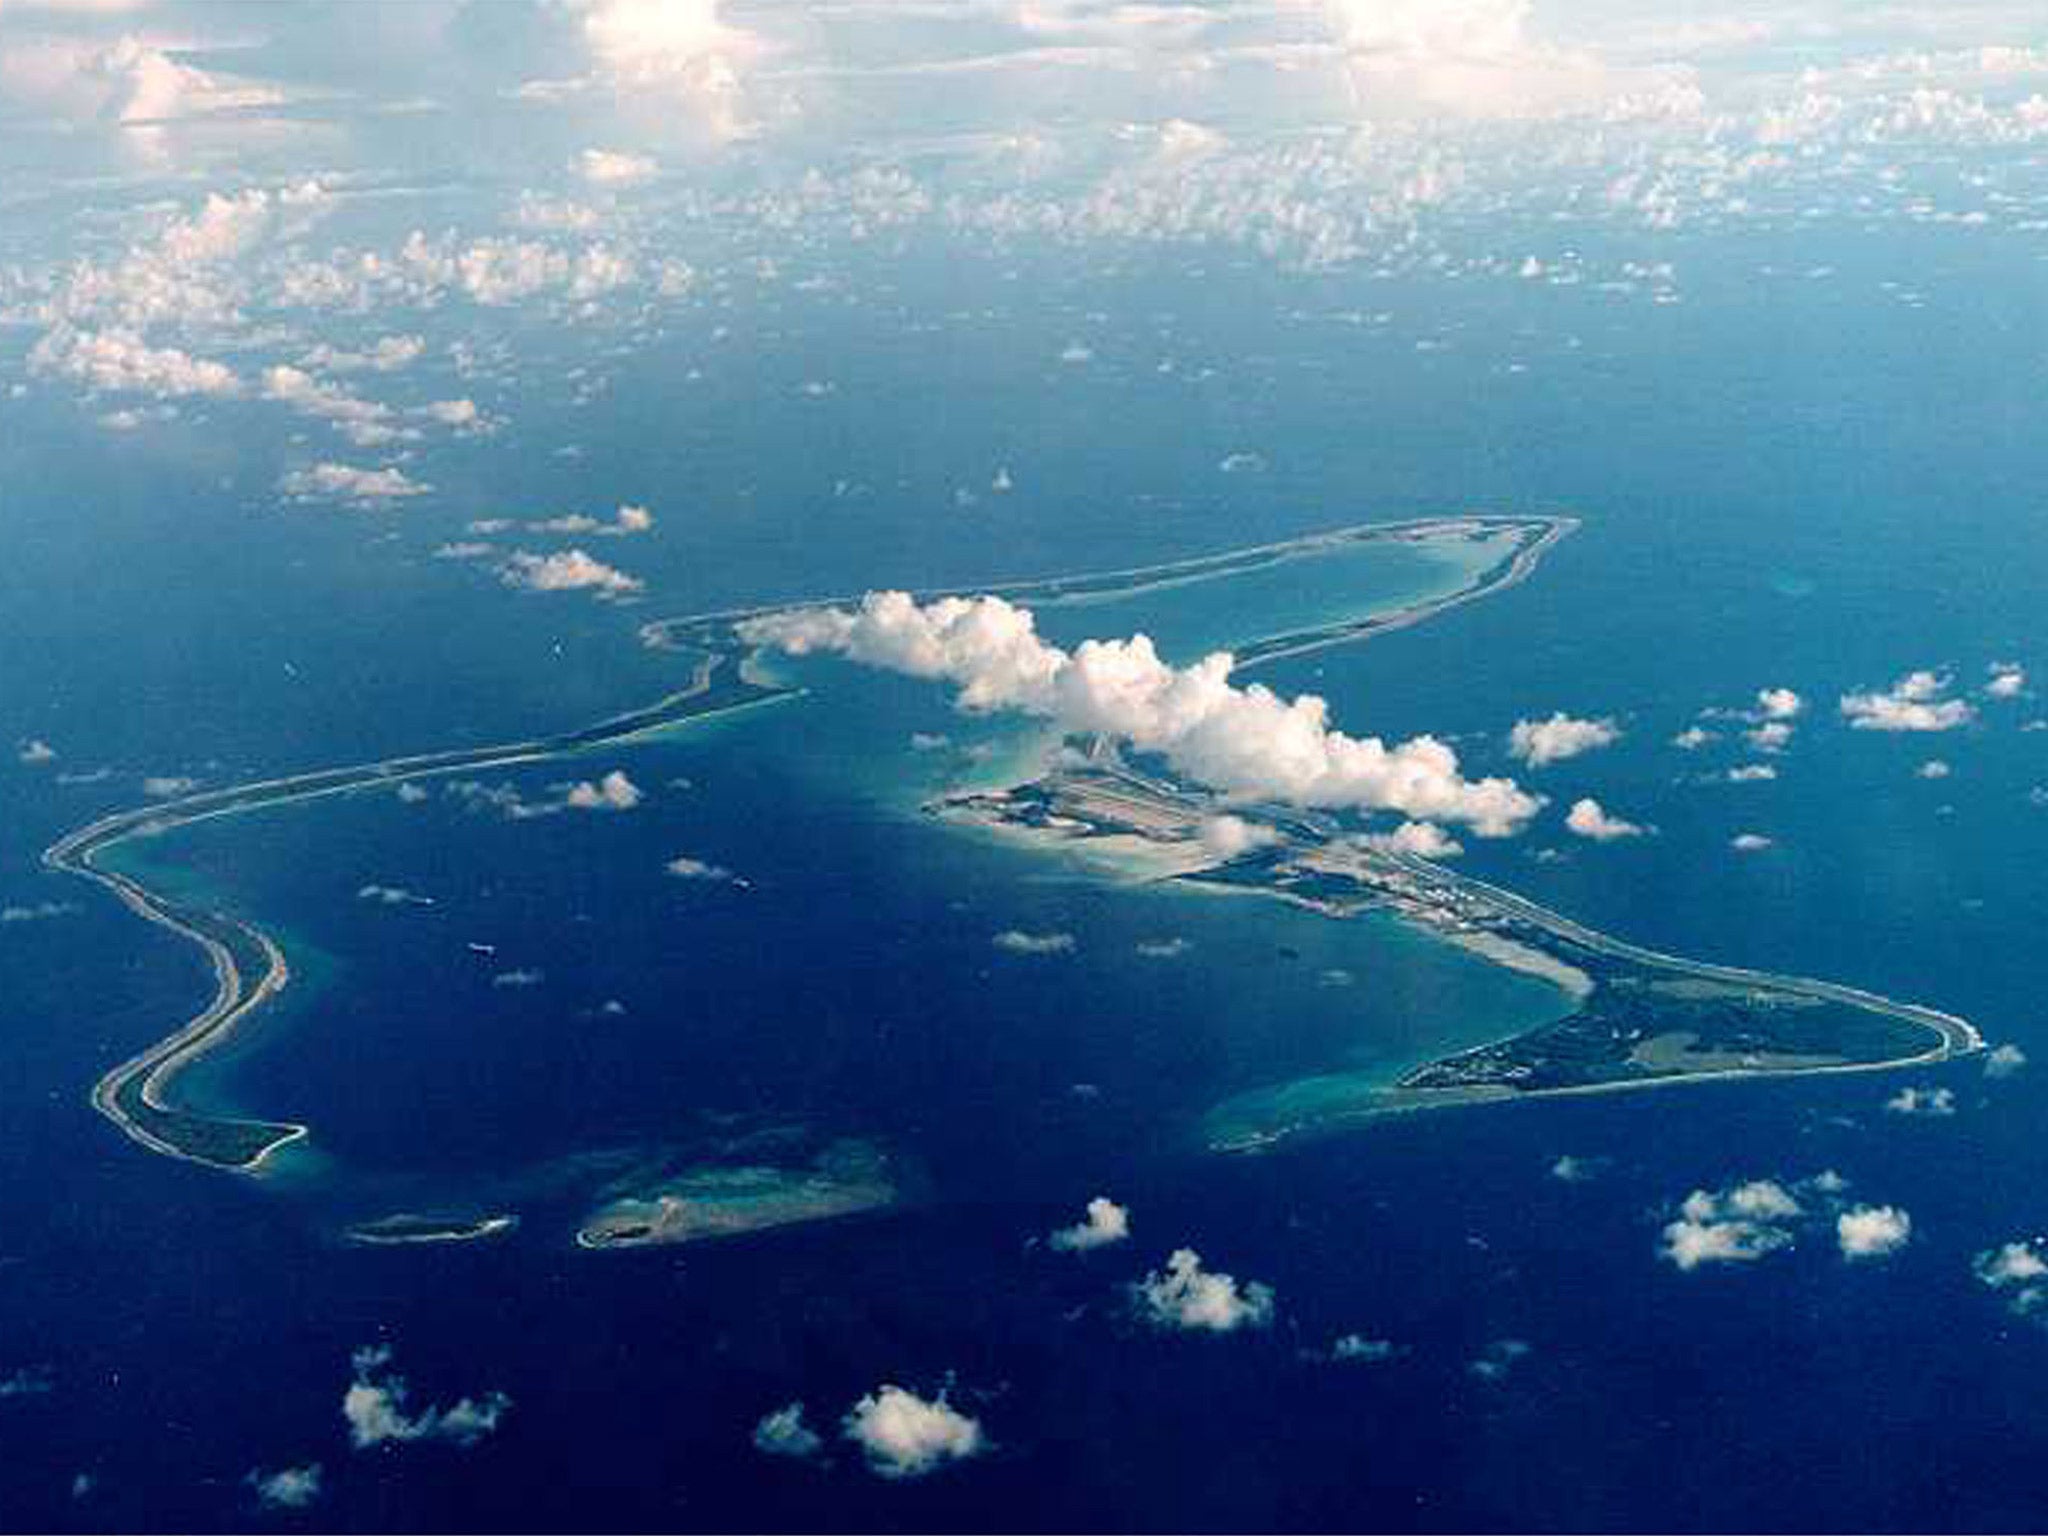 The UK-owned Indian Ocean island of Diego Garcia